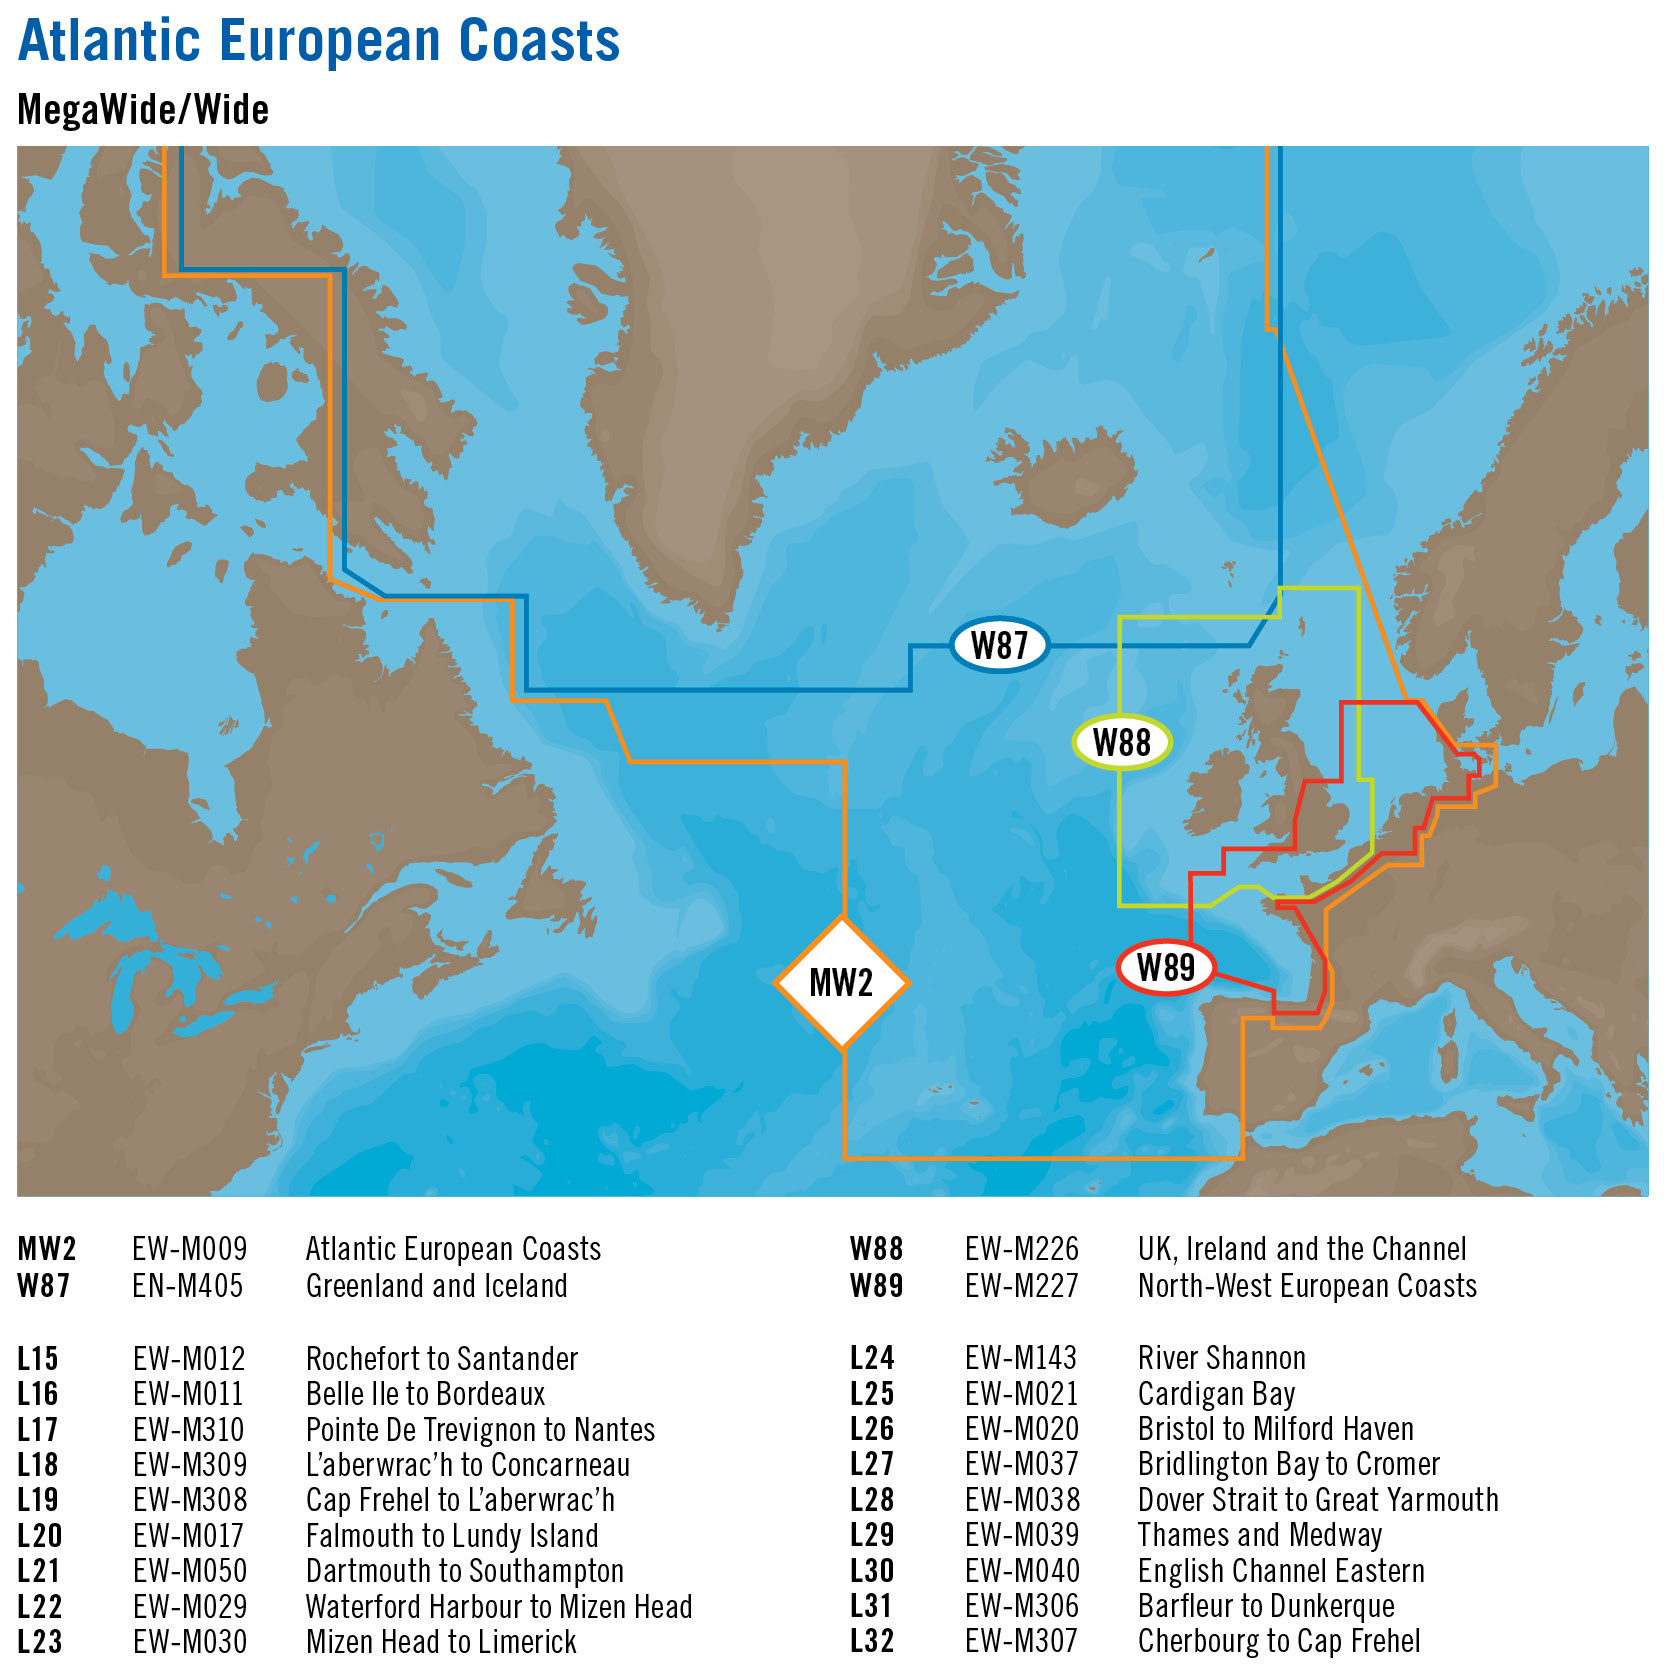 Atlantic eurocoast